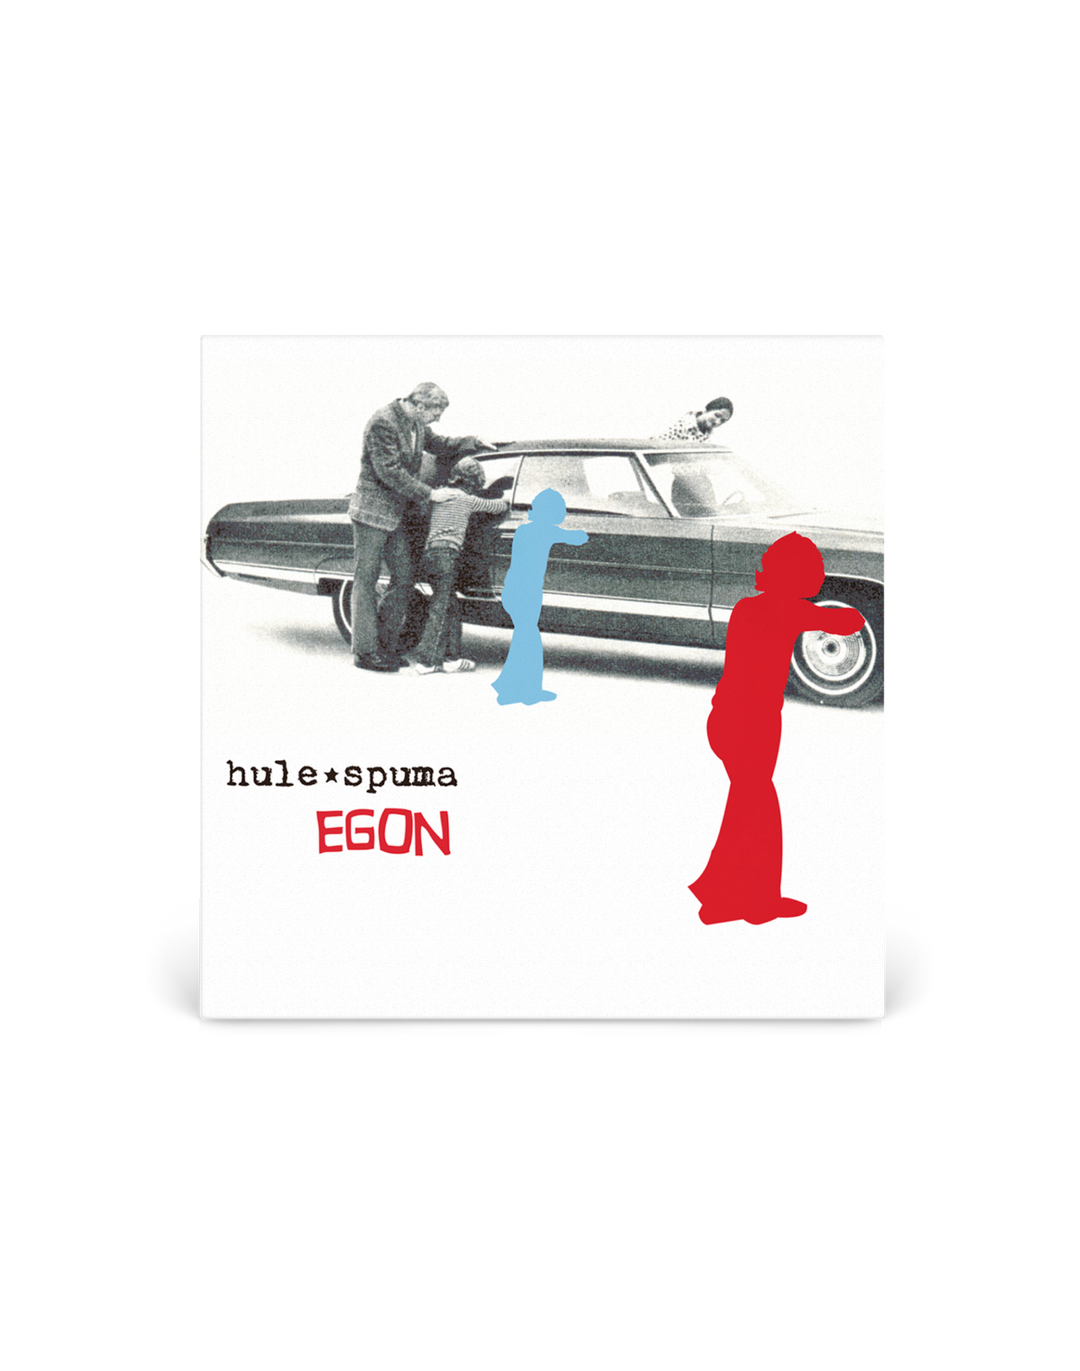 CD - EGON  (Edición 20 aniversario) Remasterizado